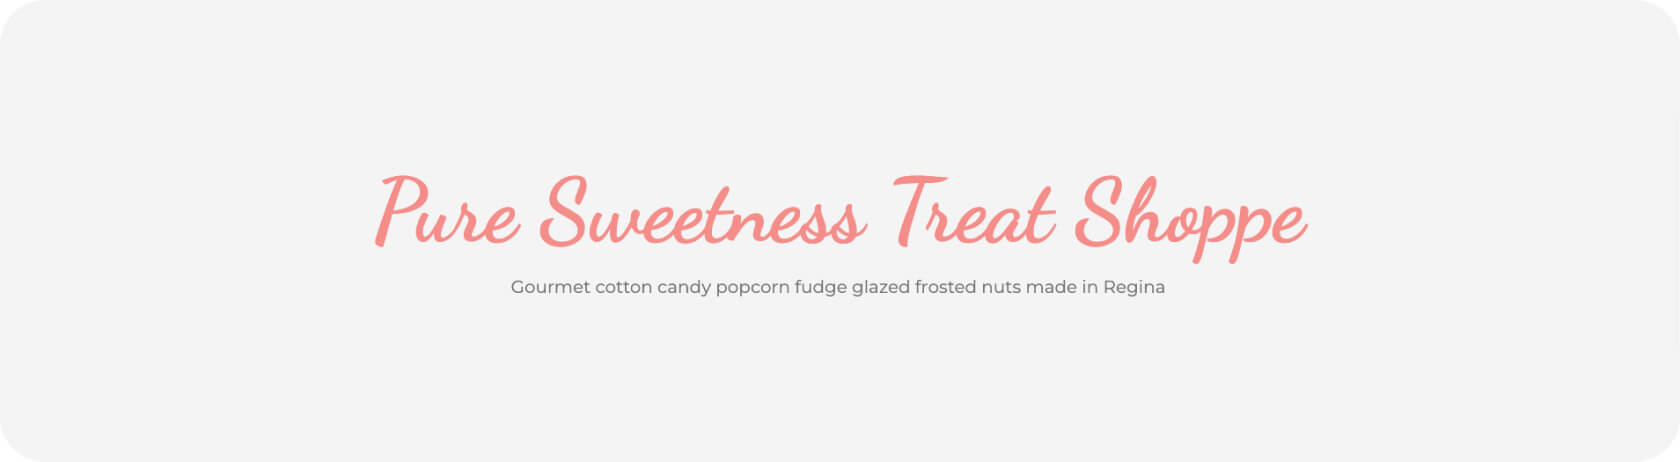 Text reading - " Pure Sweetness Treat Shoppe Gouret barbe à papa popcorn fudge glacé nuts made in Regina", avec fond gris